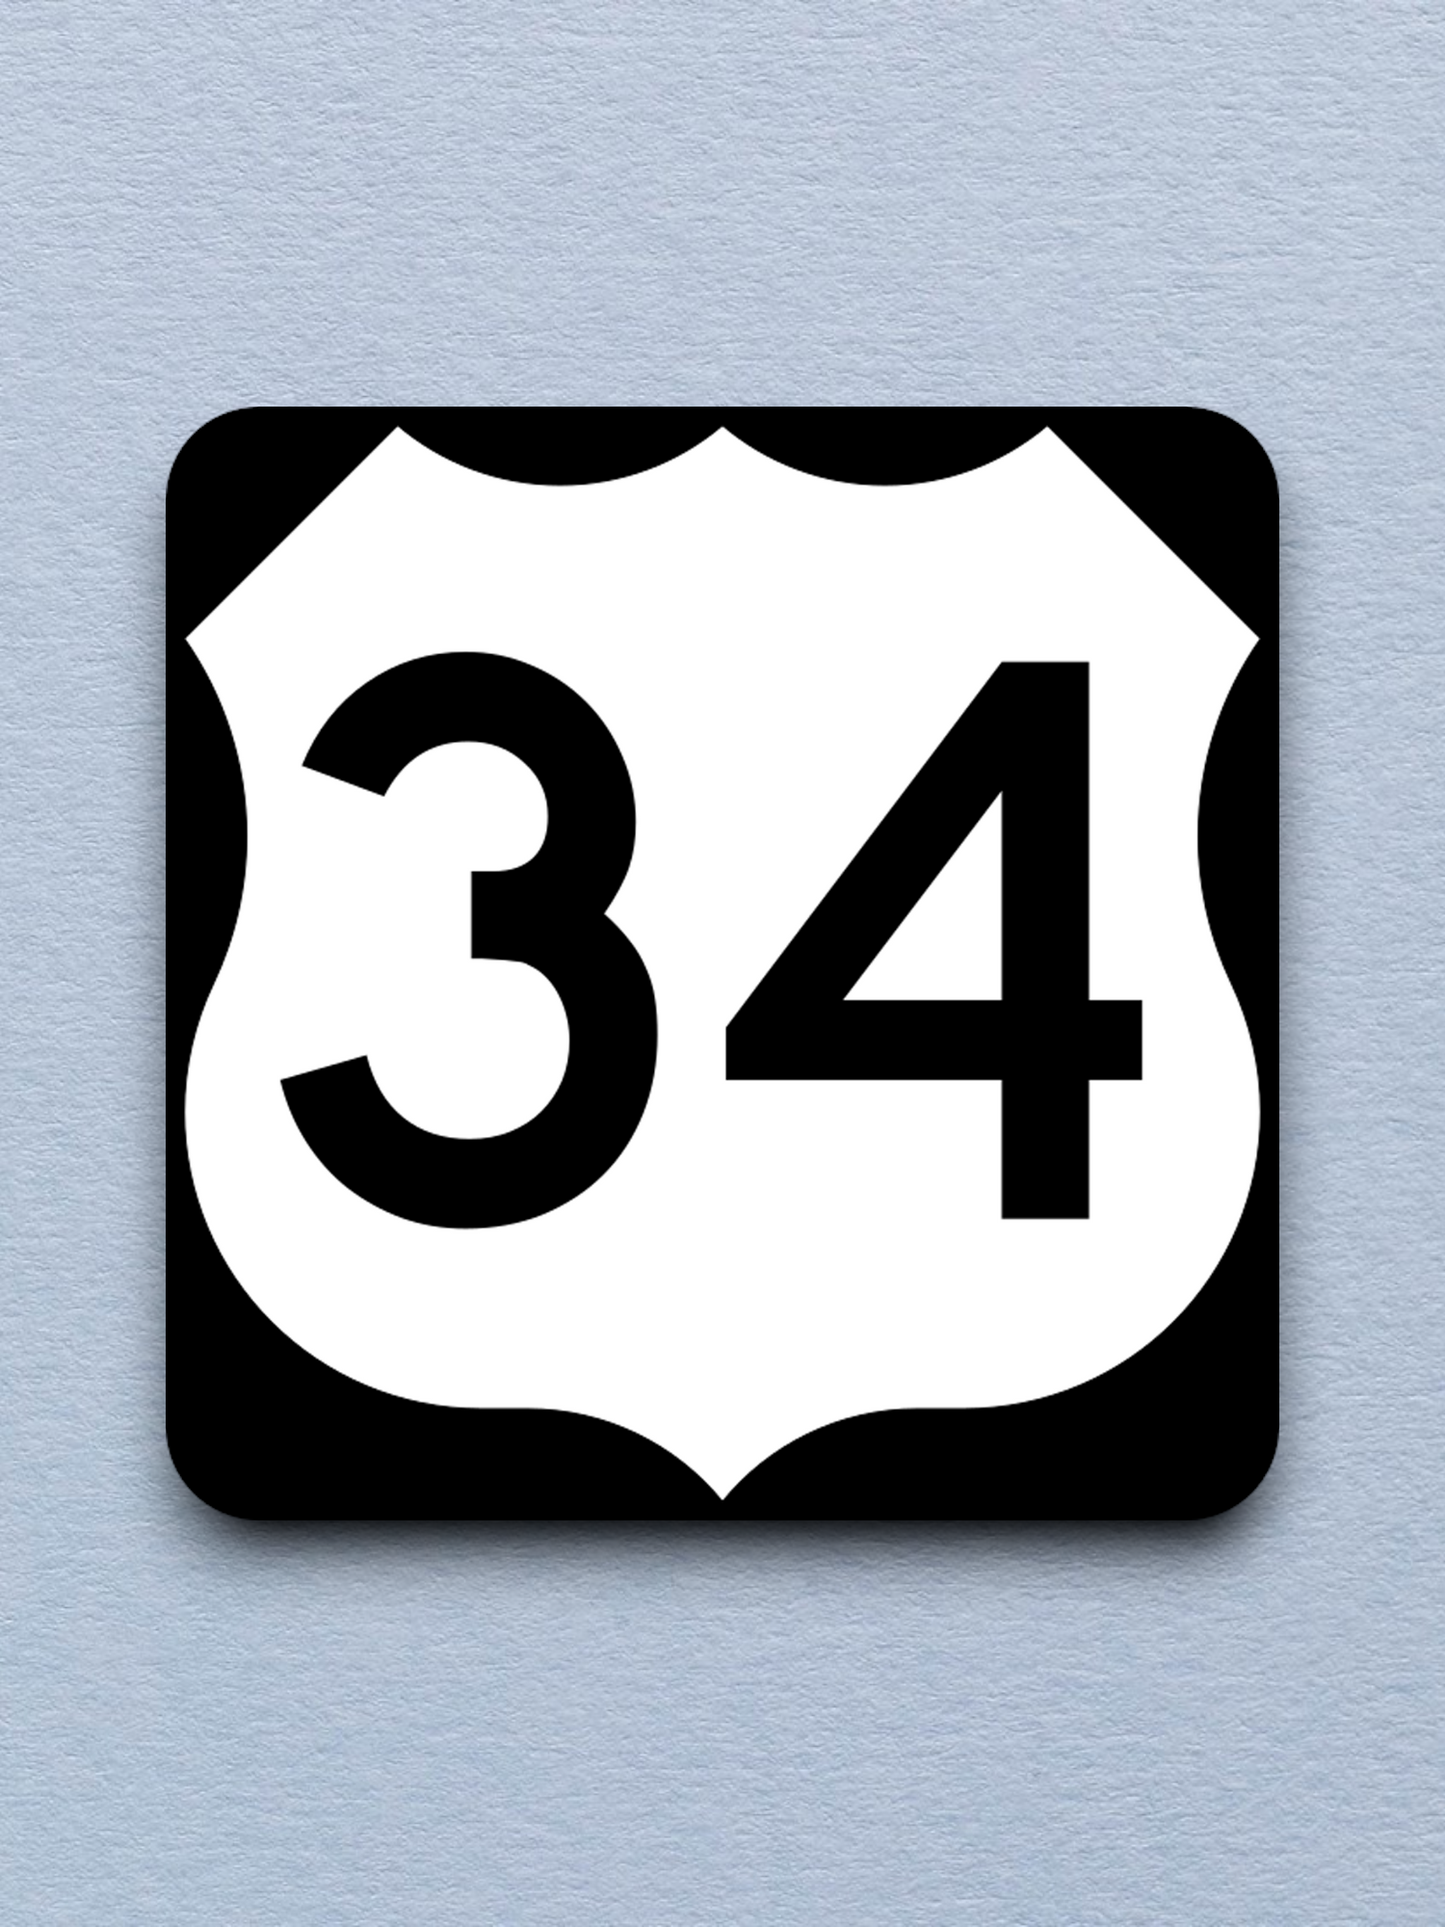 U.S. Route 34 Road Sign Sticker